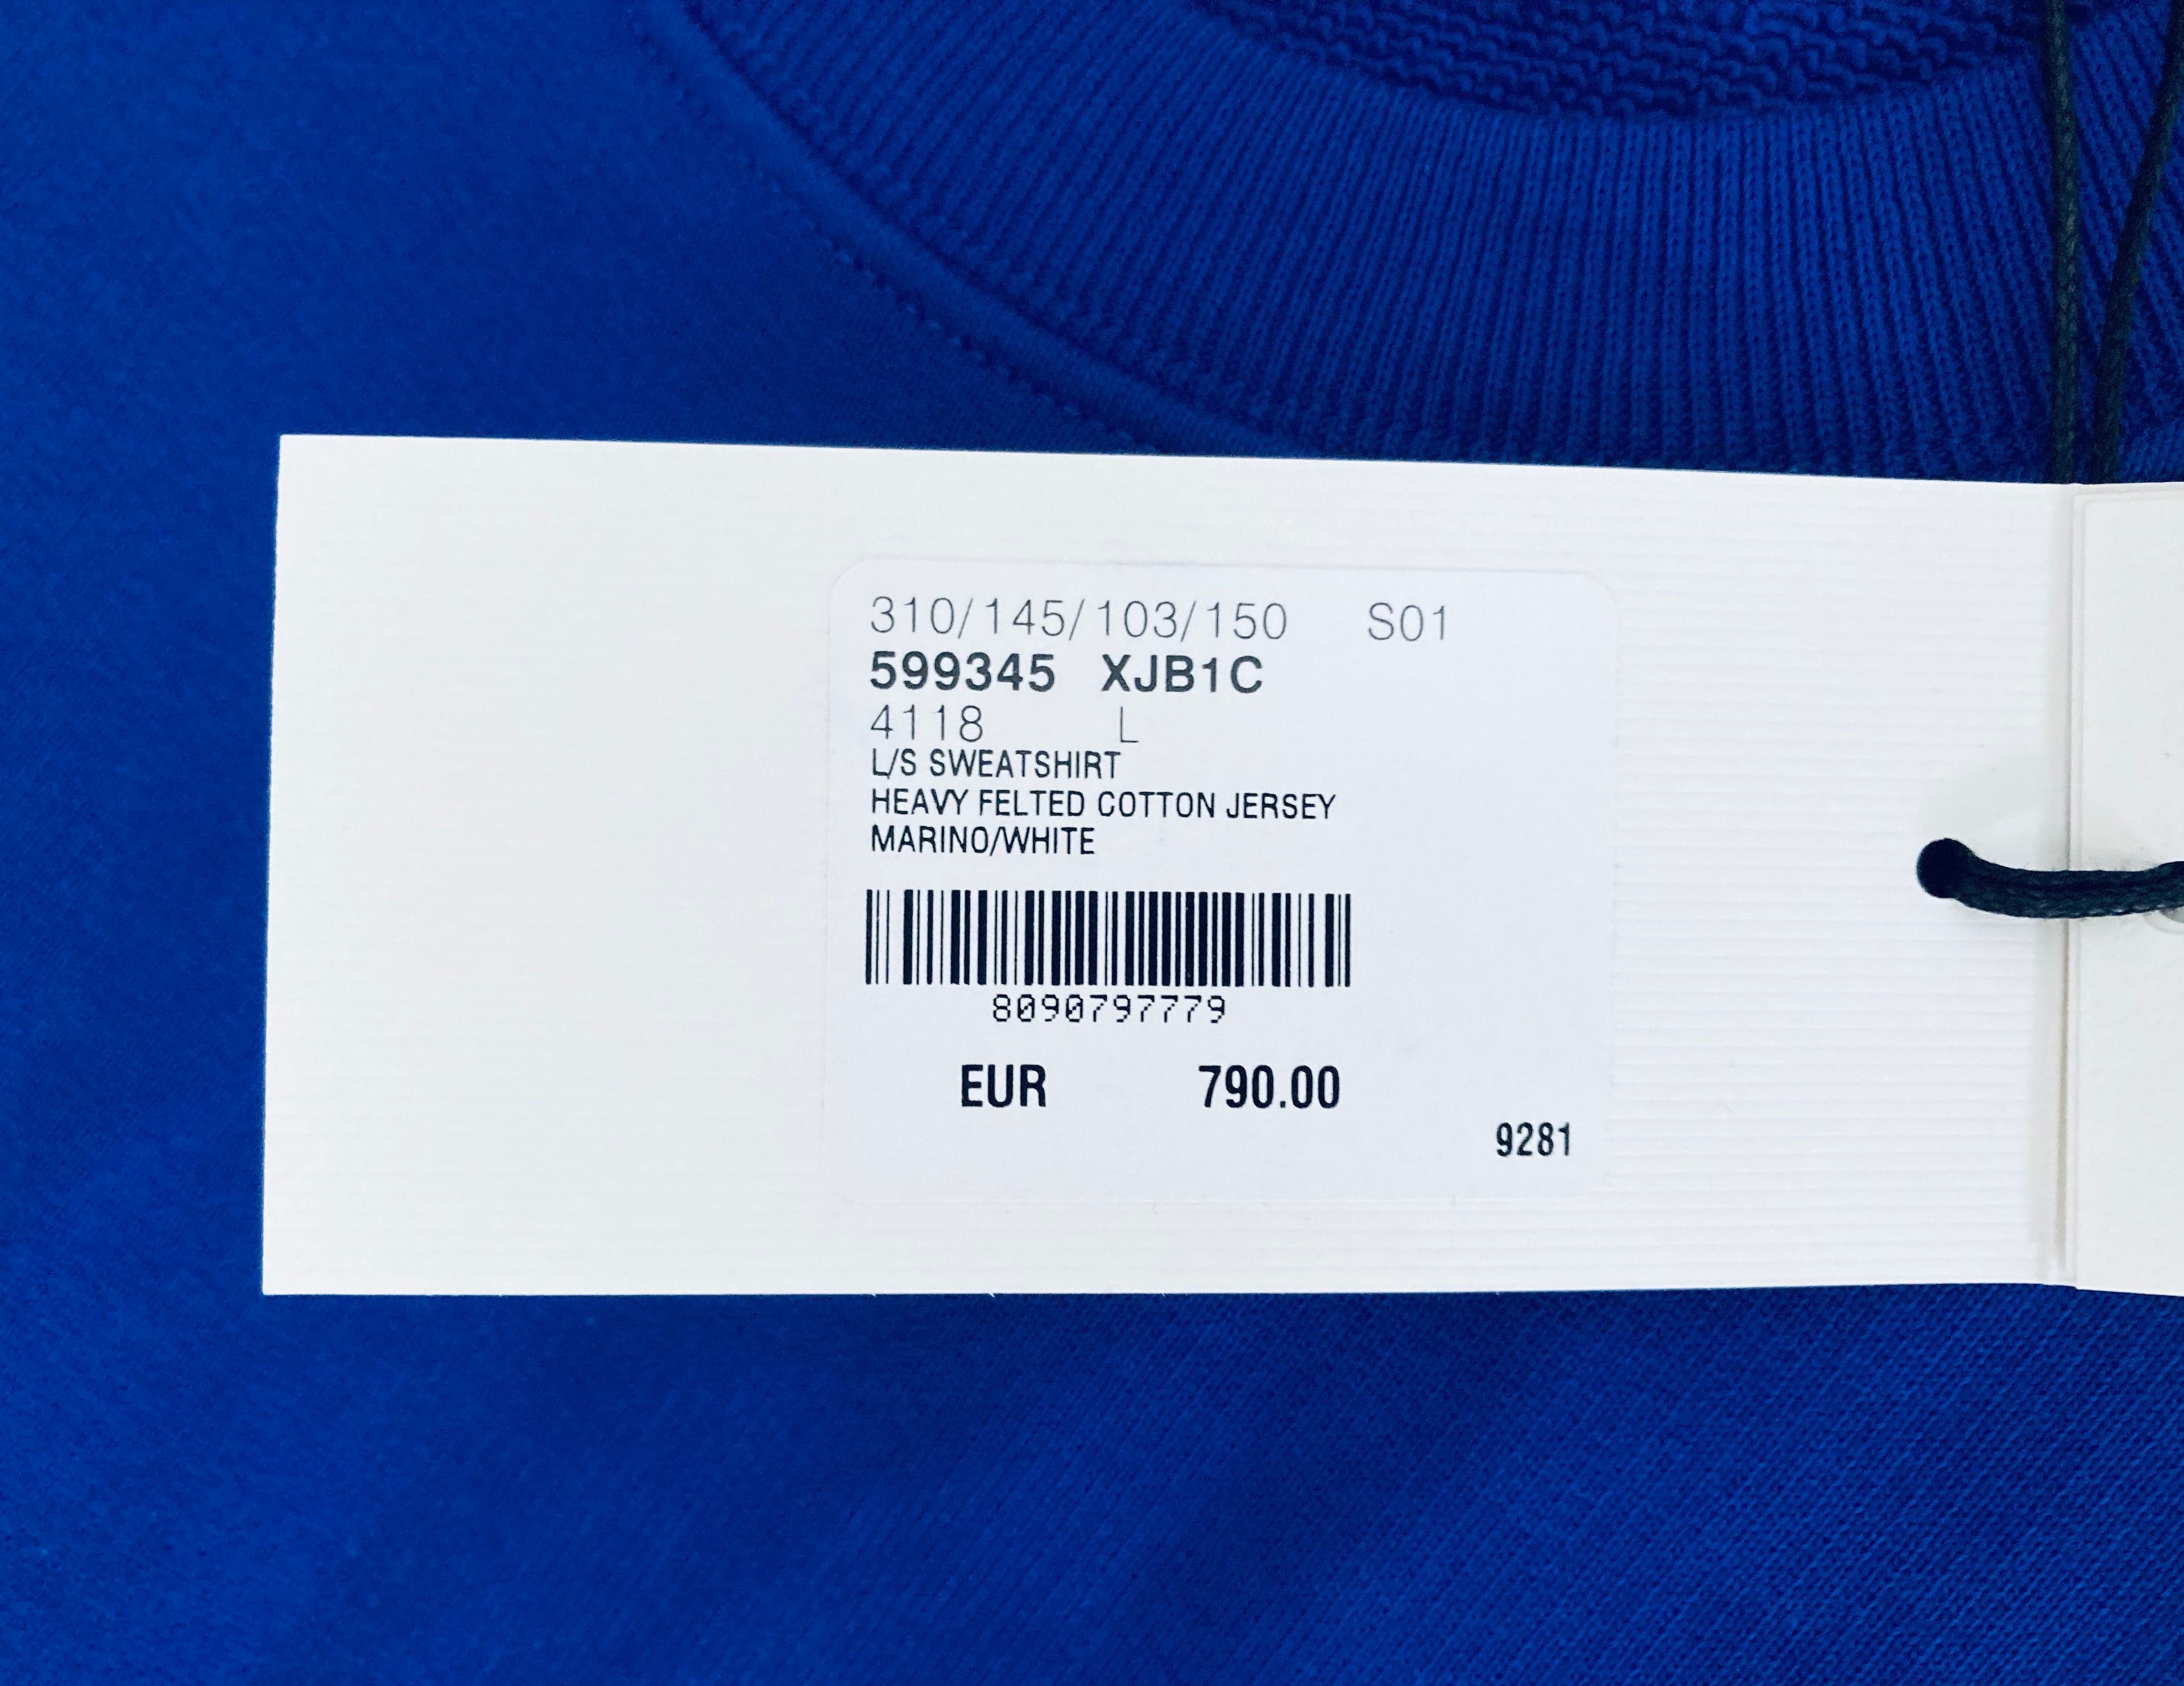 Gucci Sweatshirt // Navy Blue - Size L